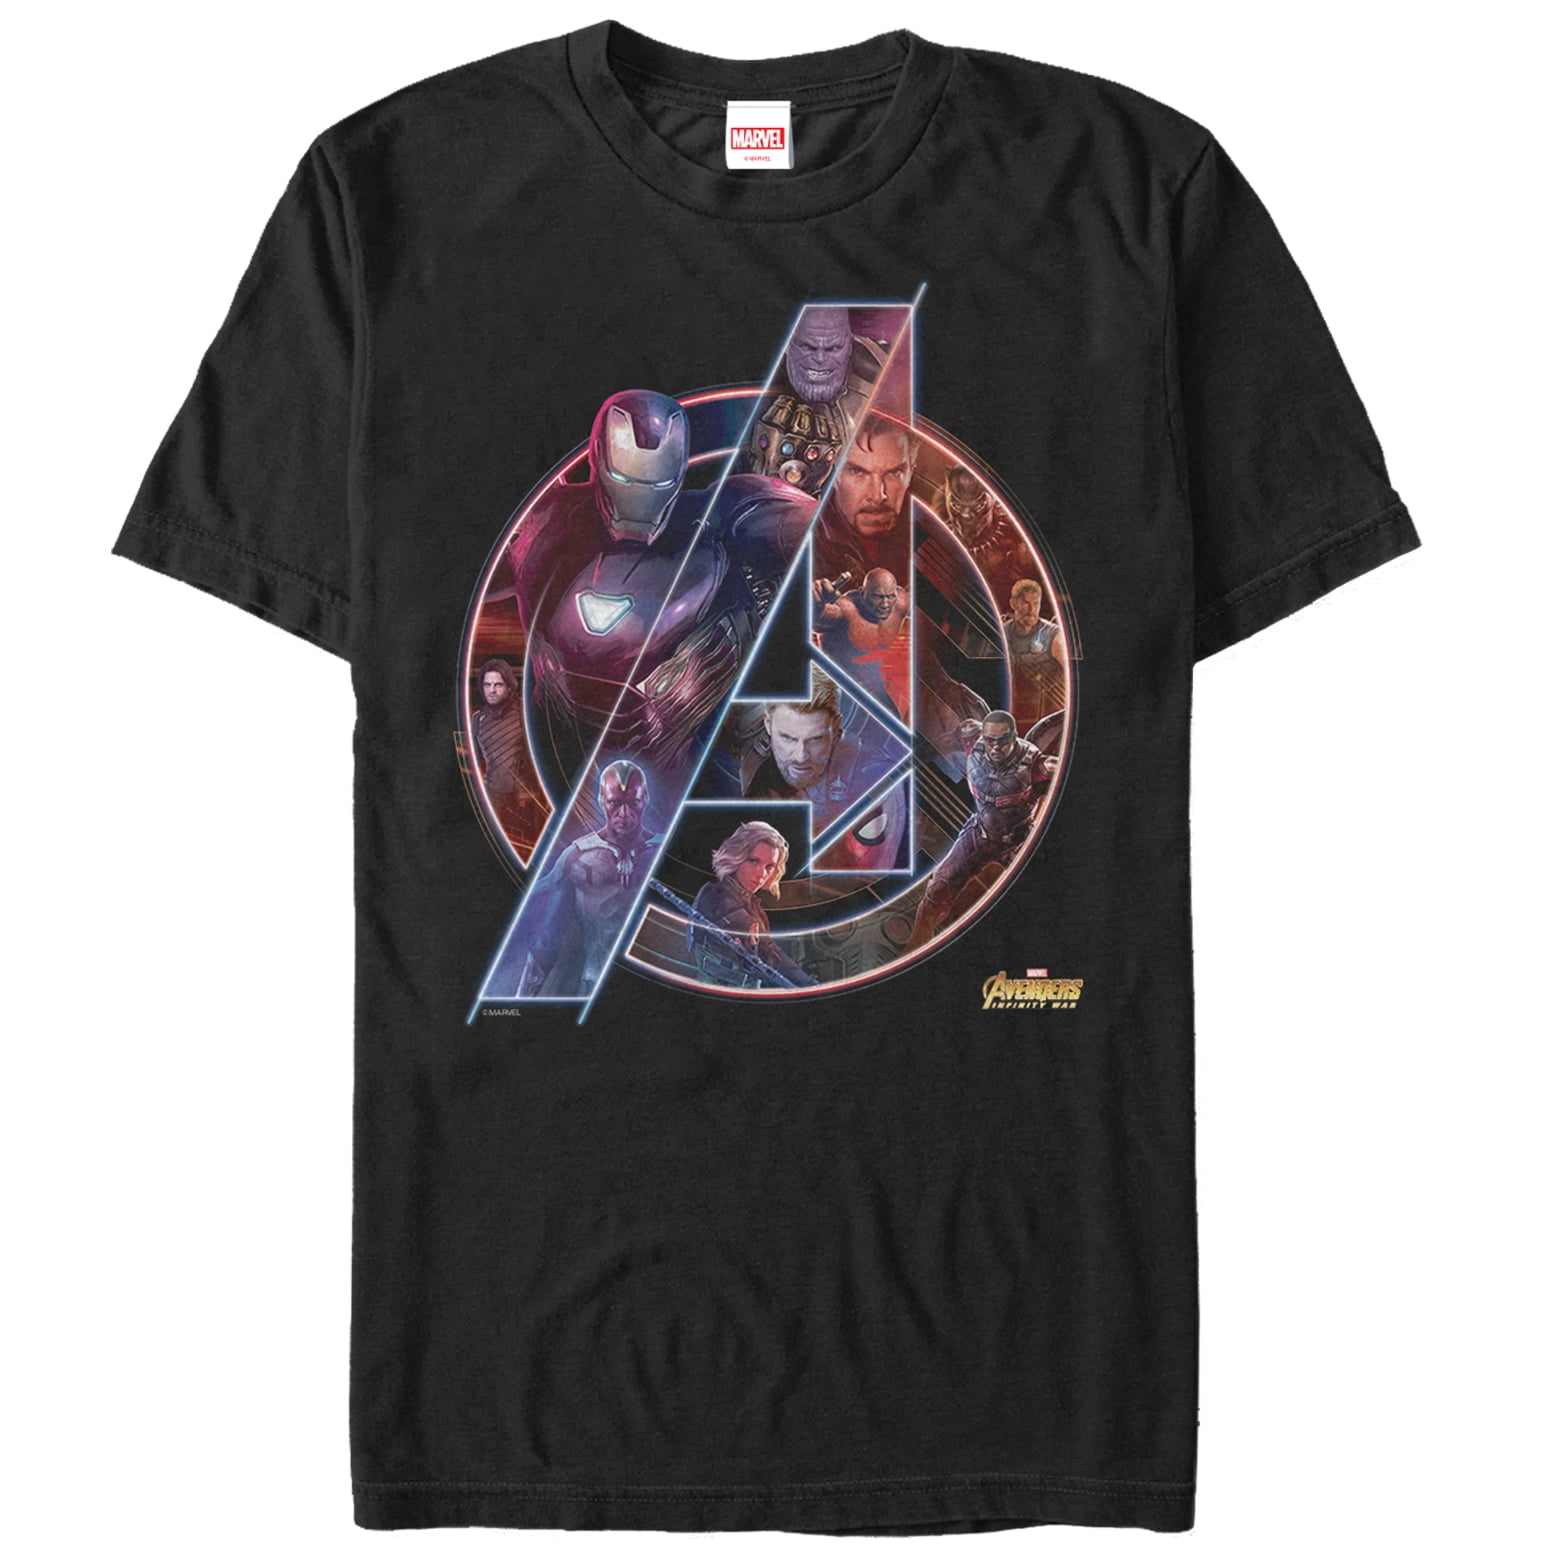 Marvel Avengers Infinity War Logos t-shirt NWT Large